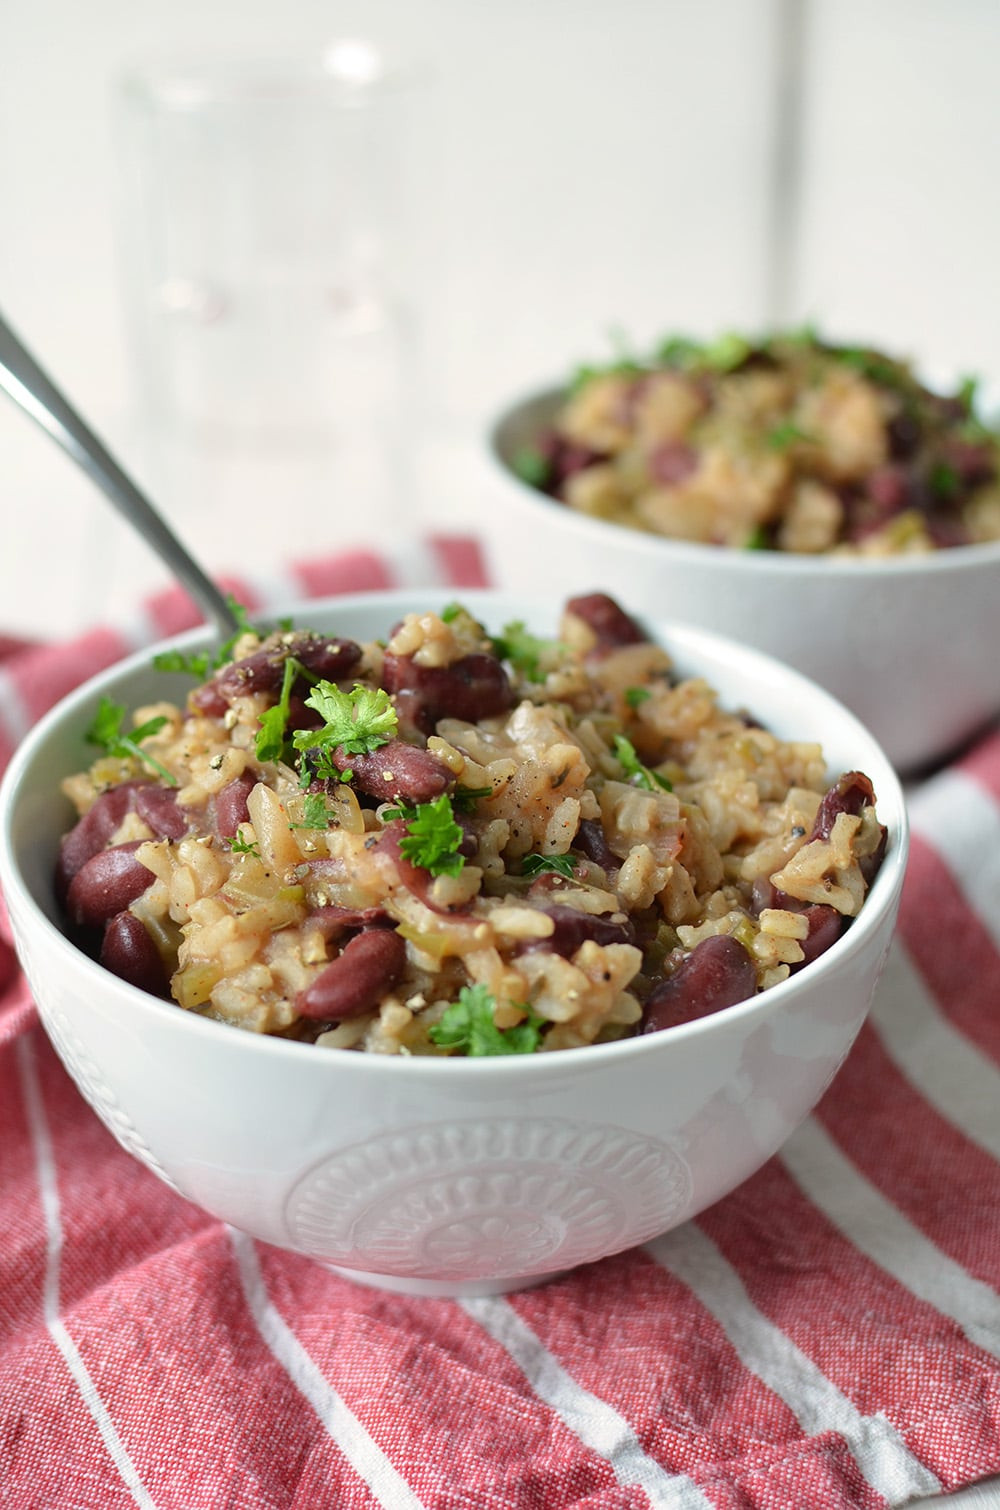 Vegan Recipes With Rice
 Slow Cooker Vegan Bean and Rice Recipe